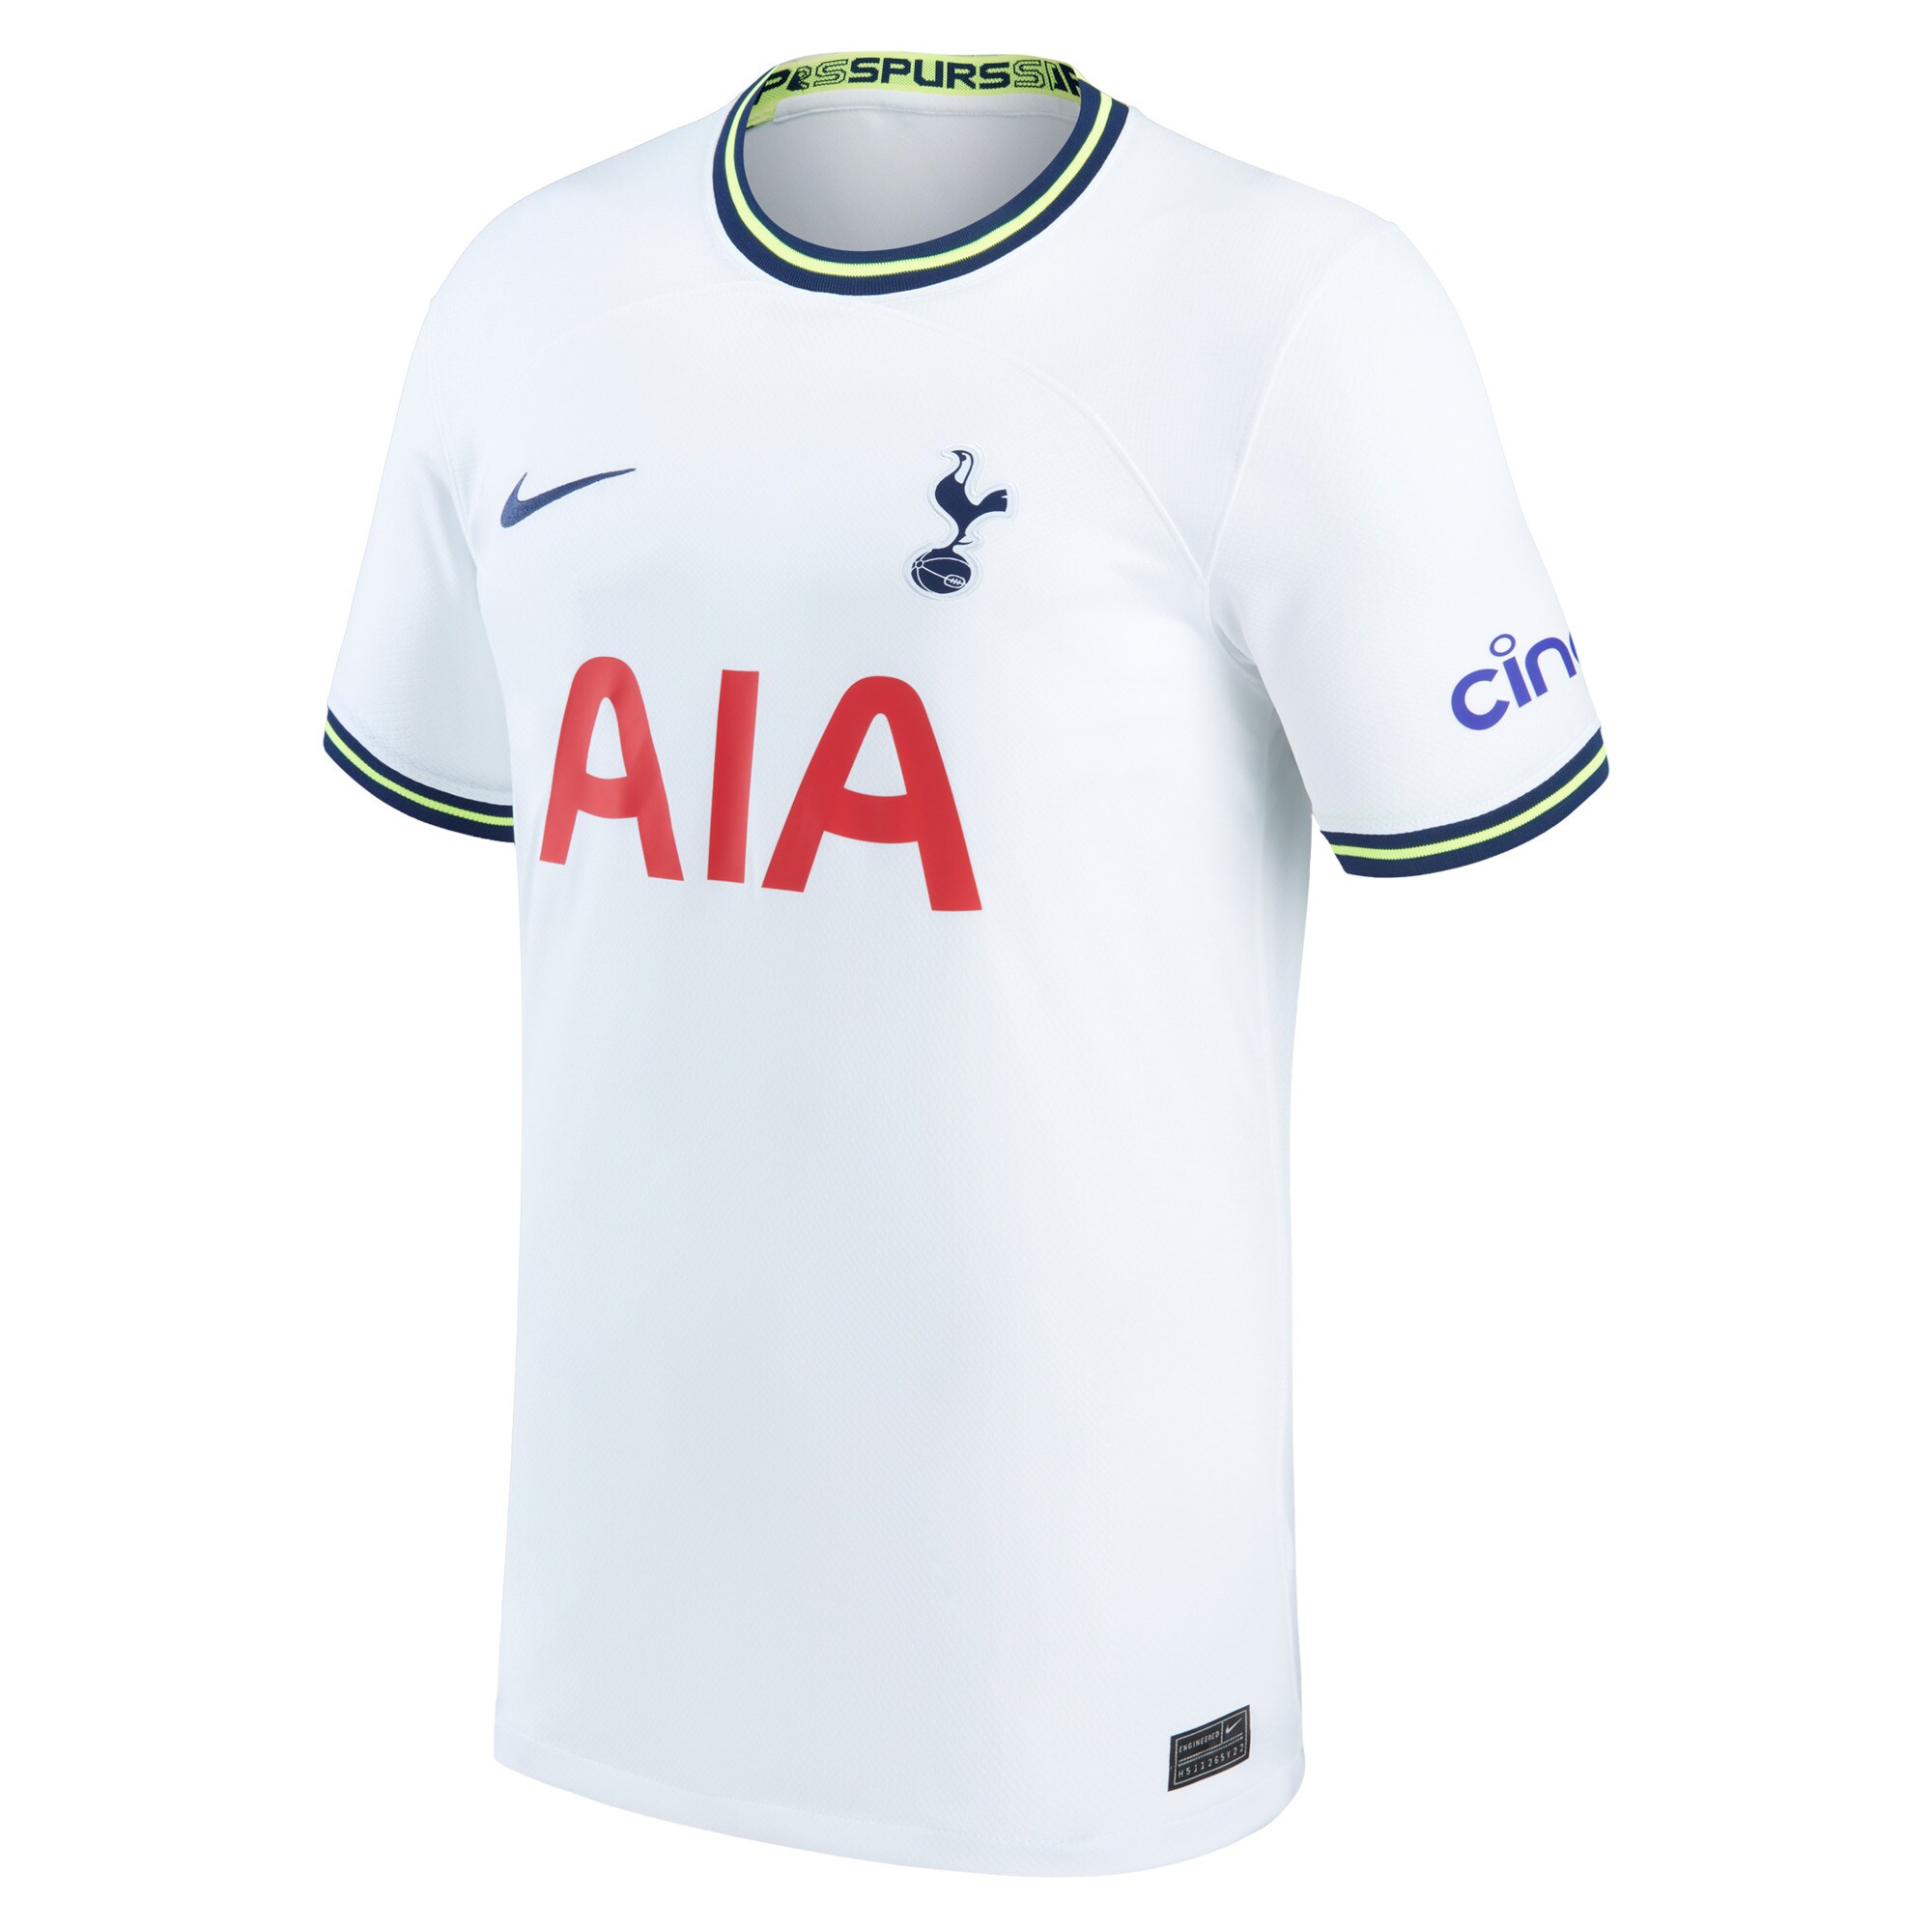 Tottenham Hotspur Home Stadium Shirt 2022-2023 with Kulusevski 21 printing